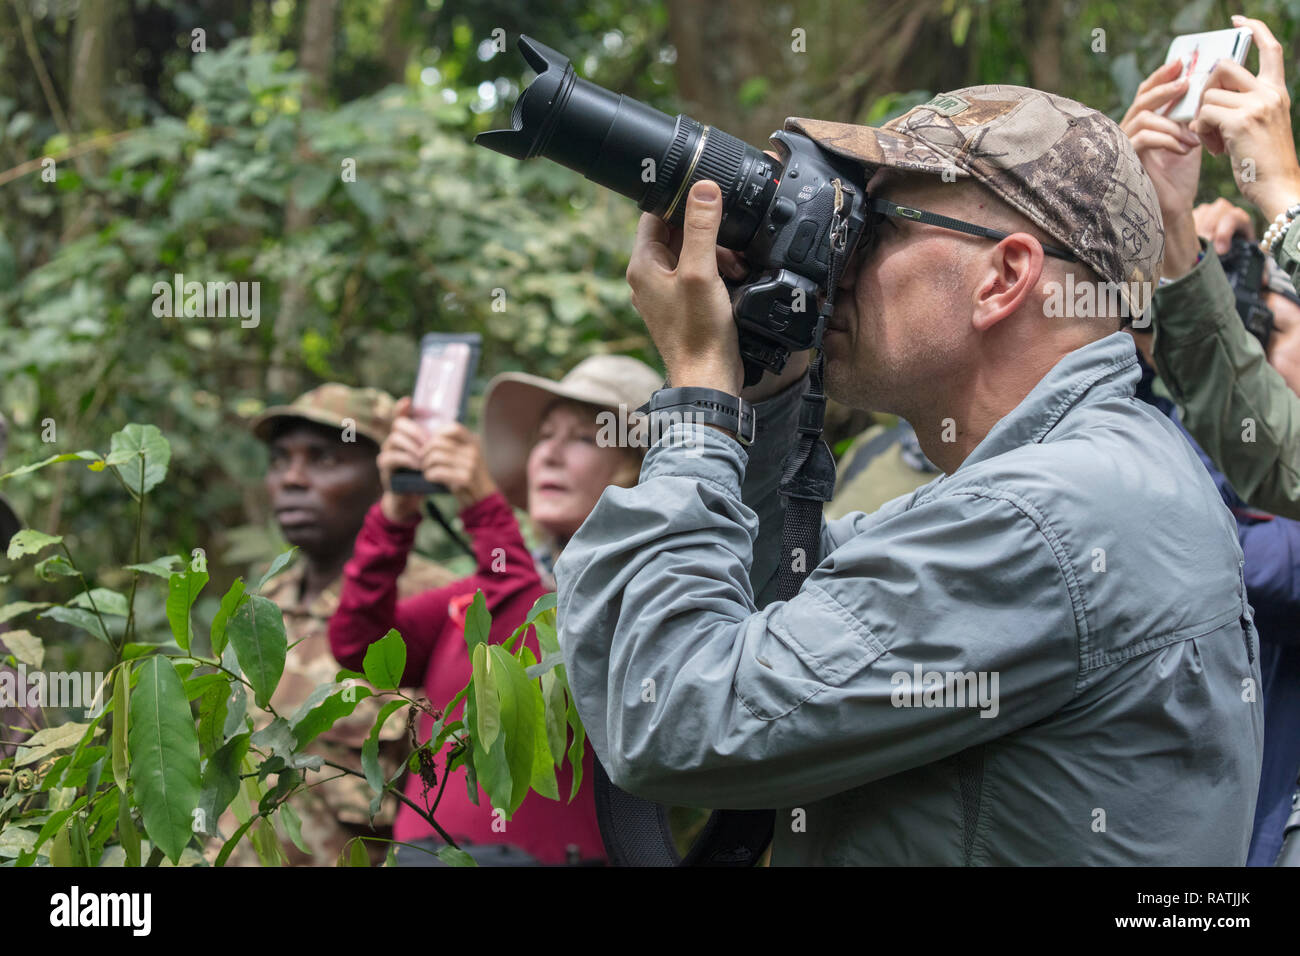 Touristen auf Safari beobachten und fotografieren Berggorillas, Bwindi Impenetrable Forest, Uganda, Afrika Stockfoto